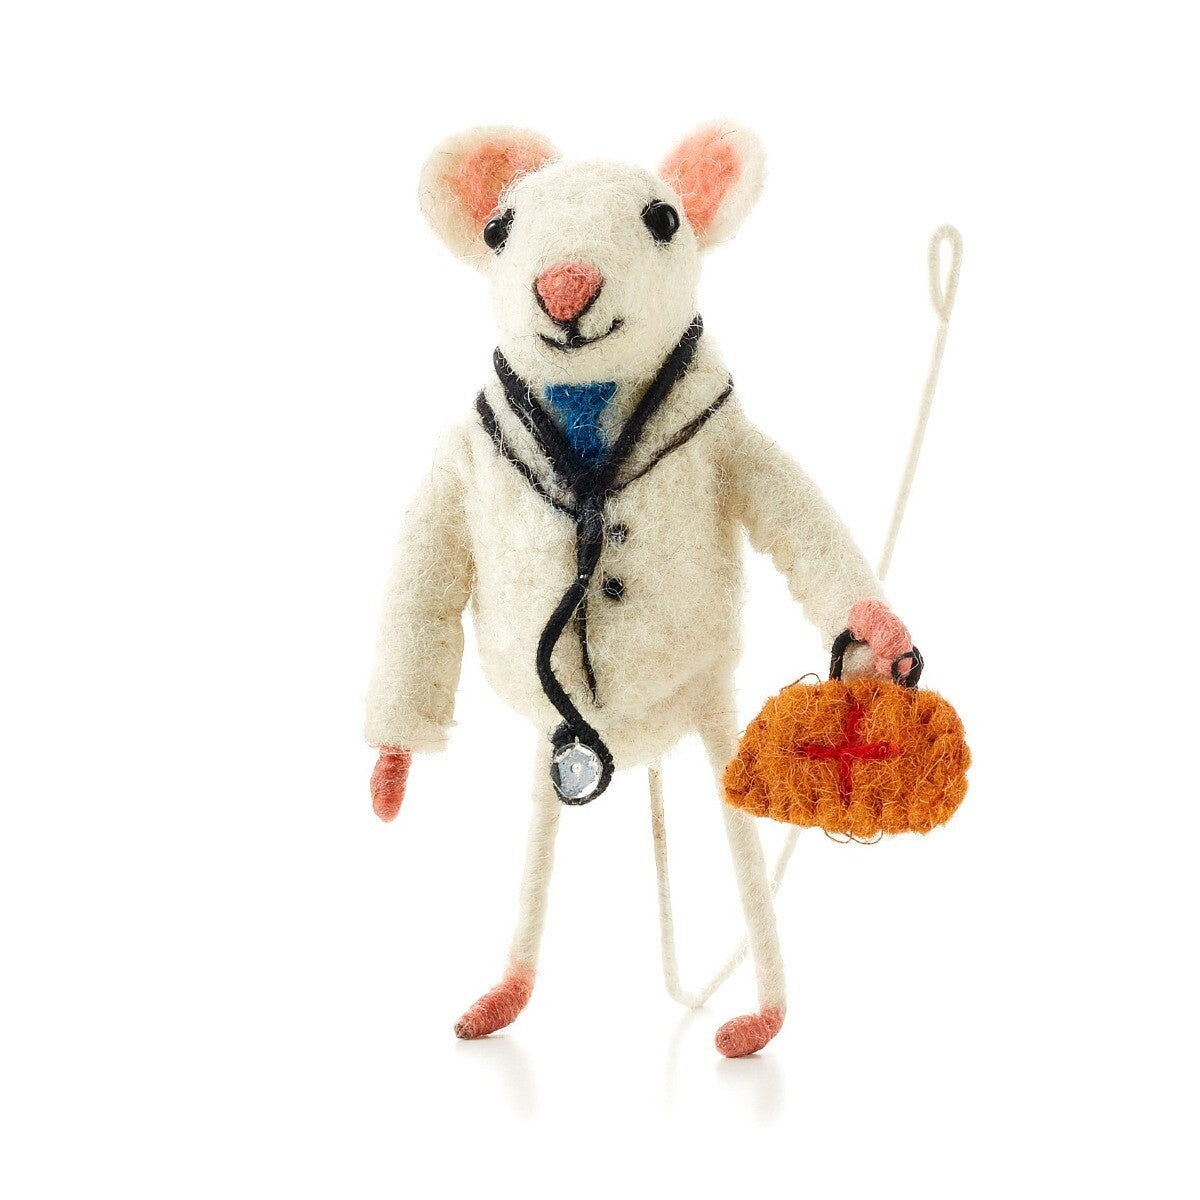 doctor felt mouse